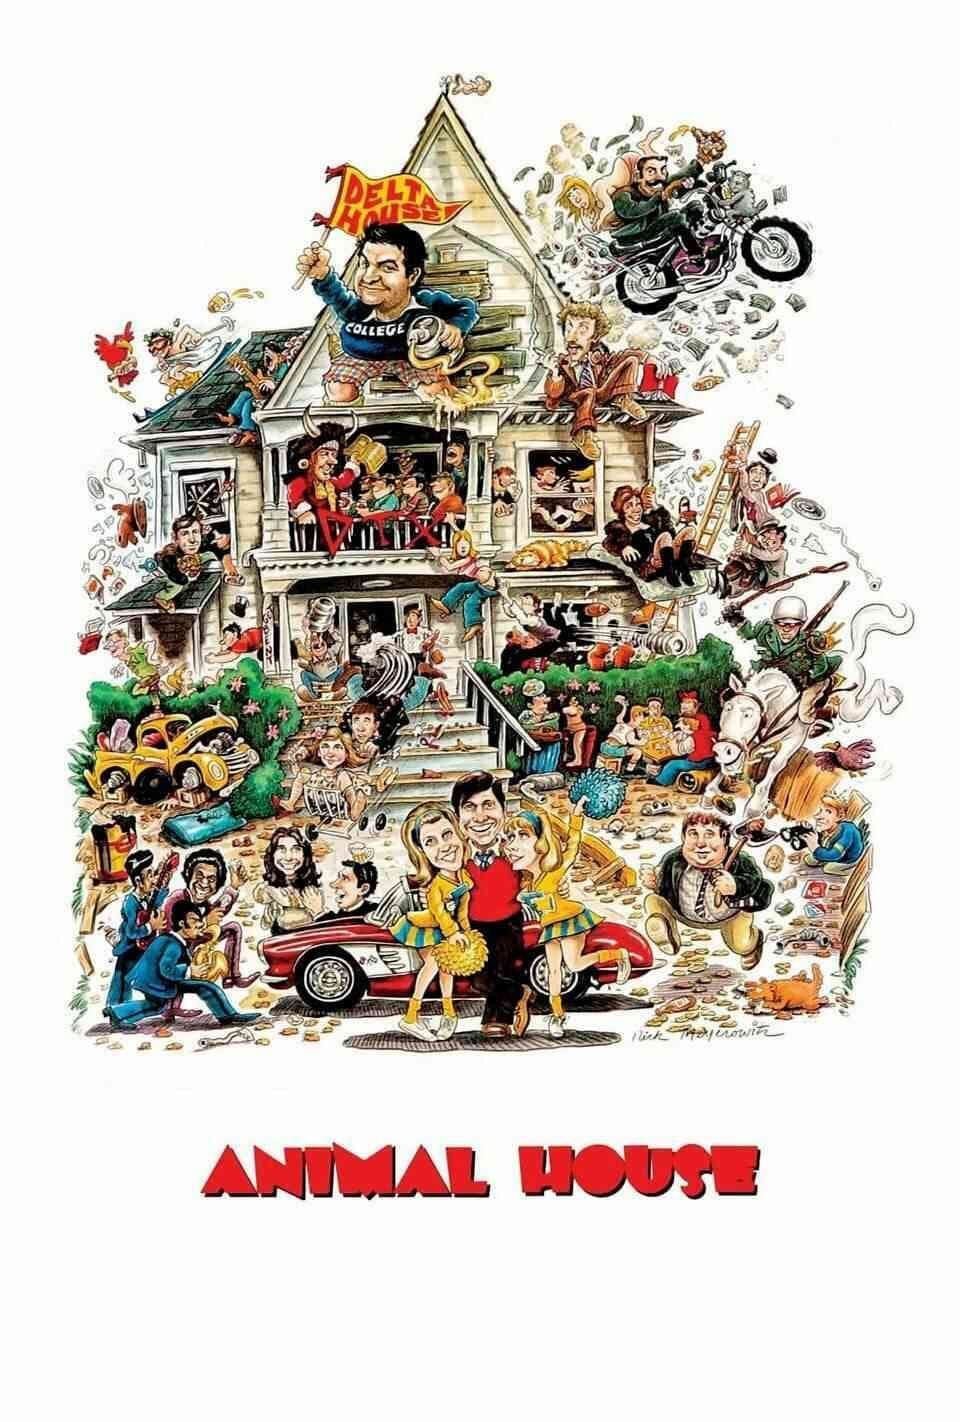 Read National Lampoon's Animal House screenplay.